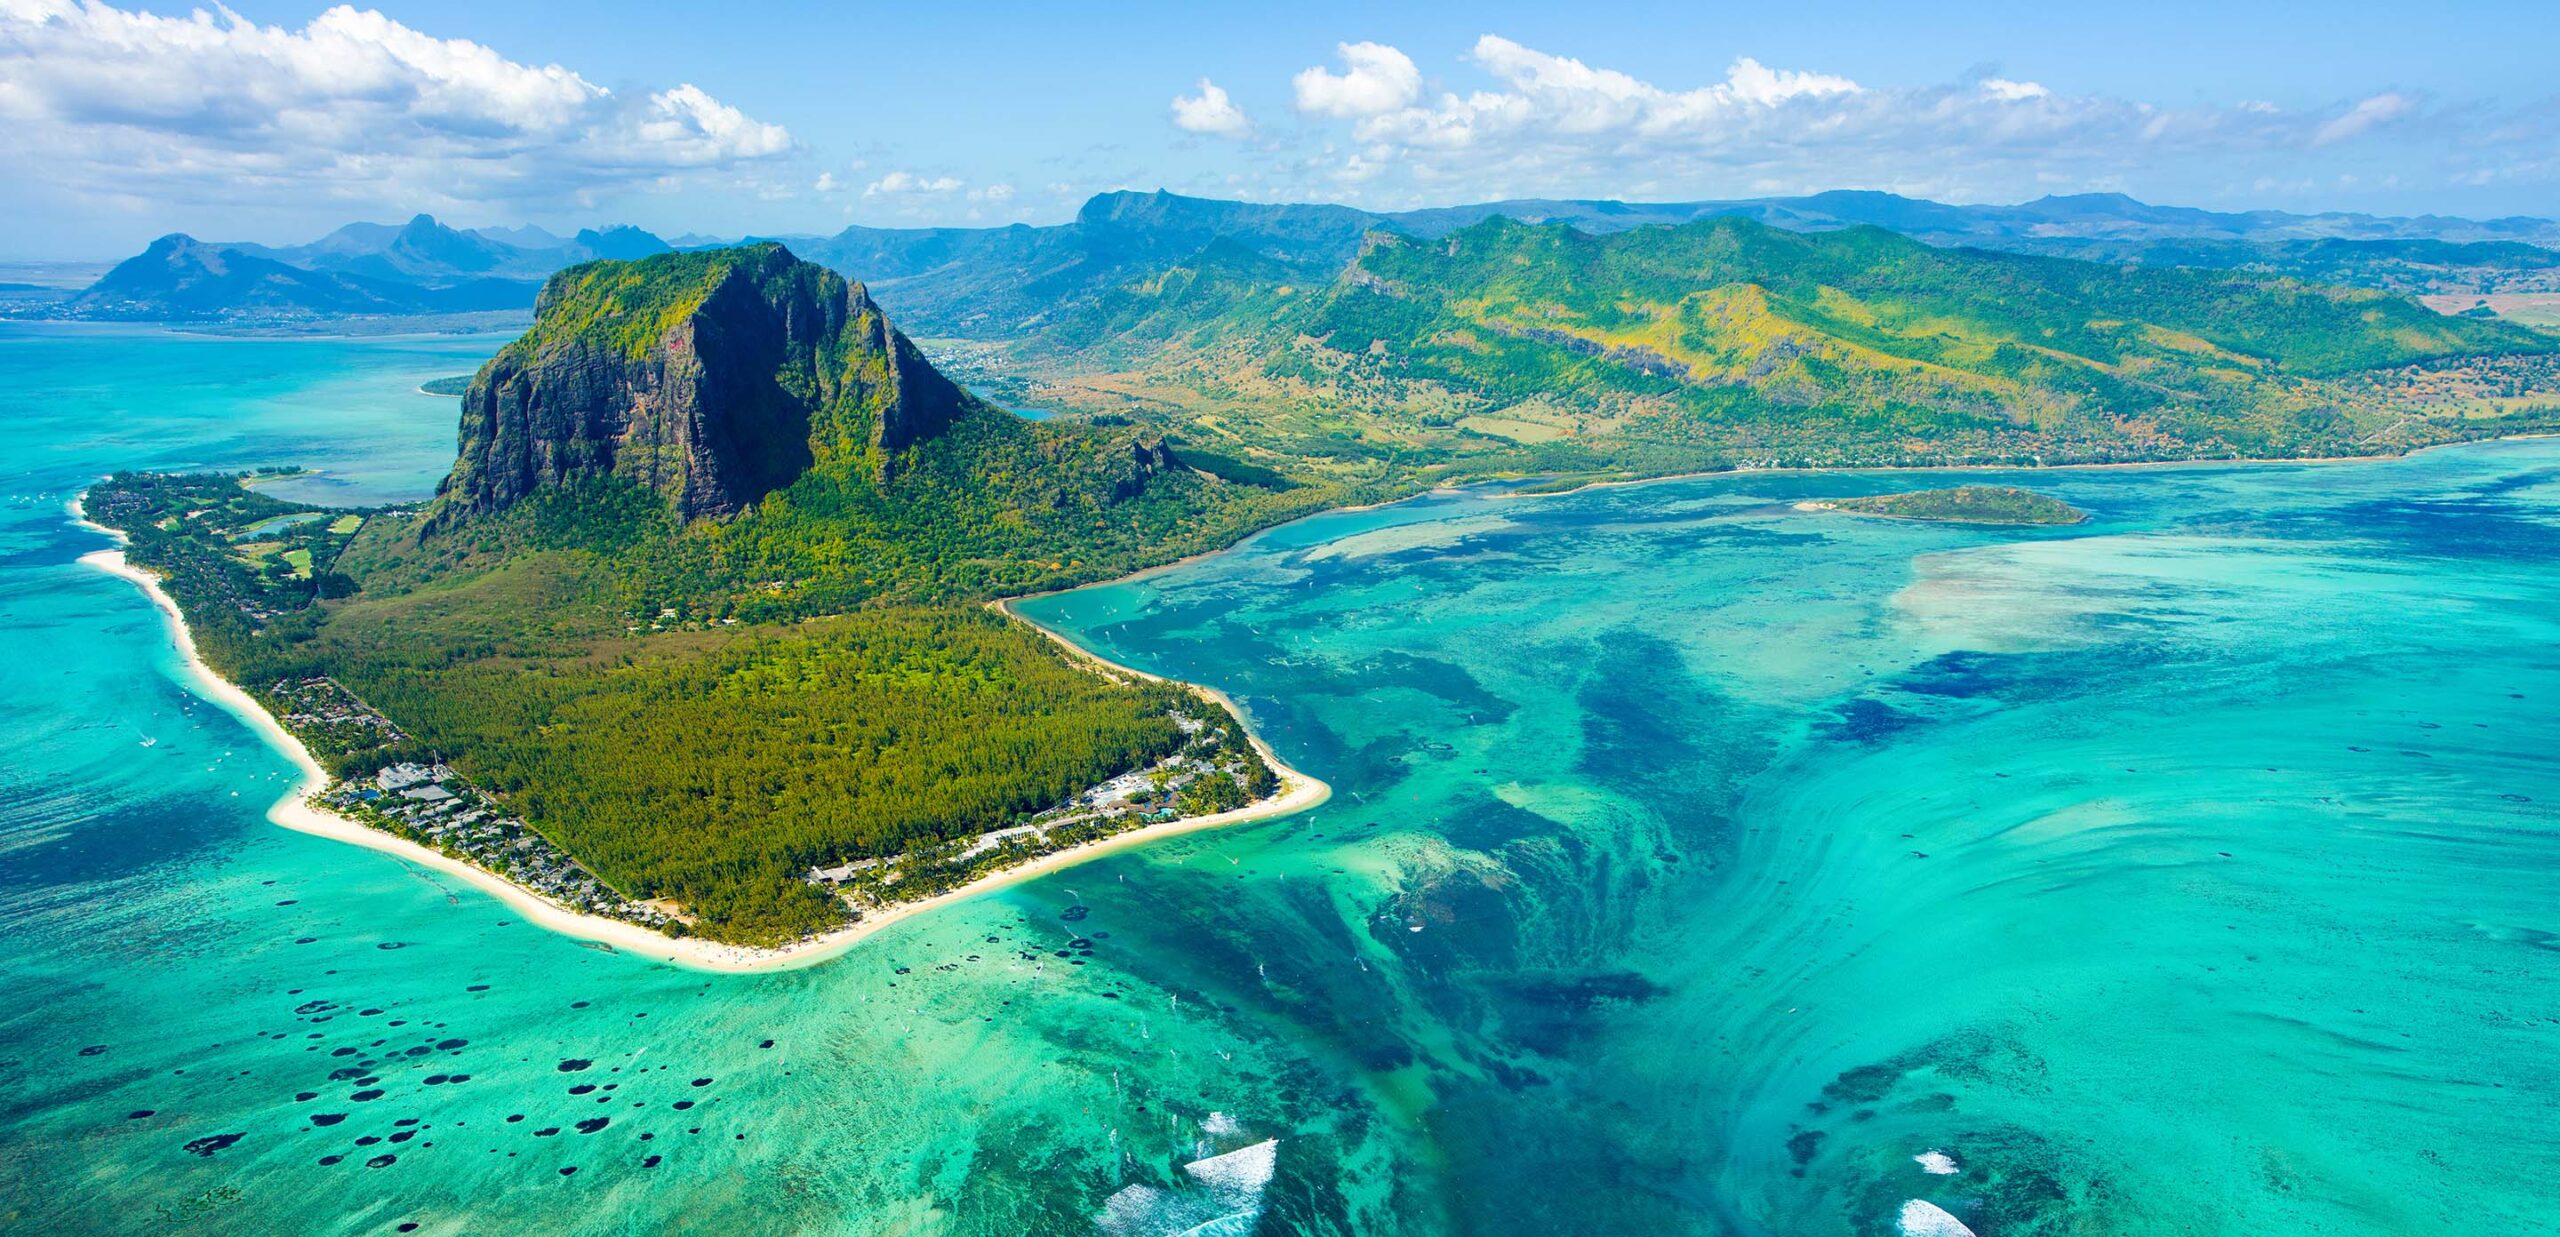 The coastline of Mauritius.